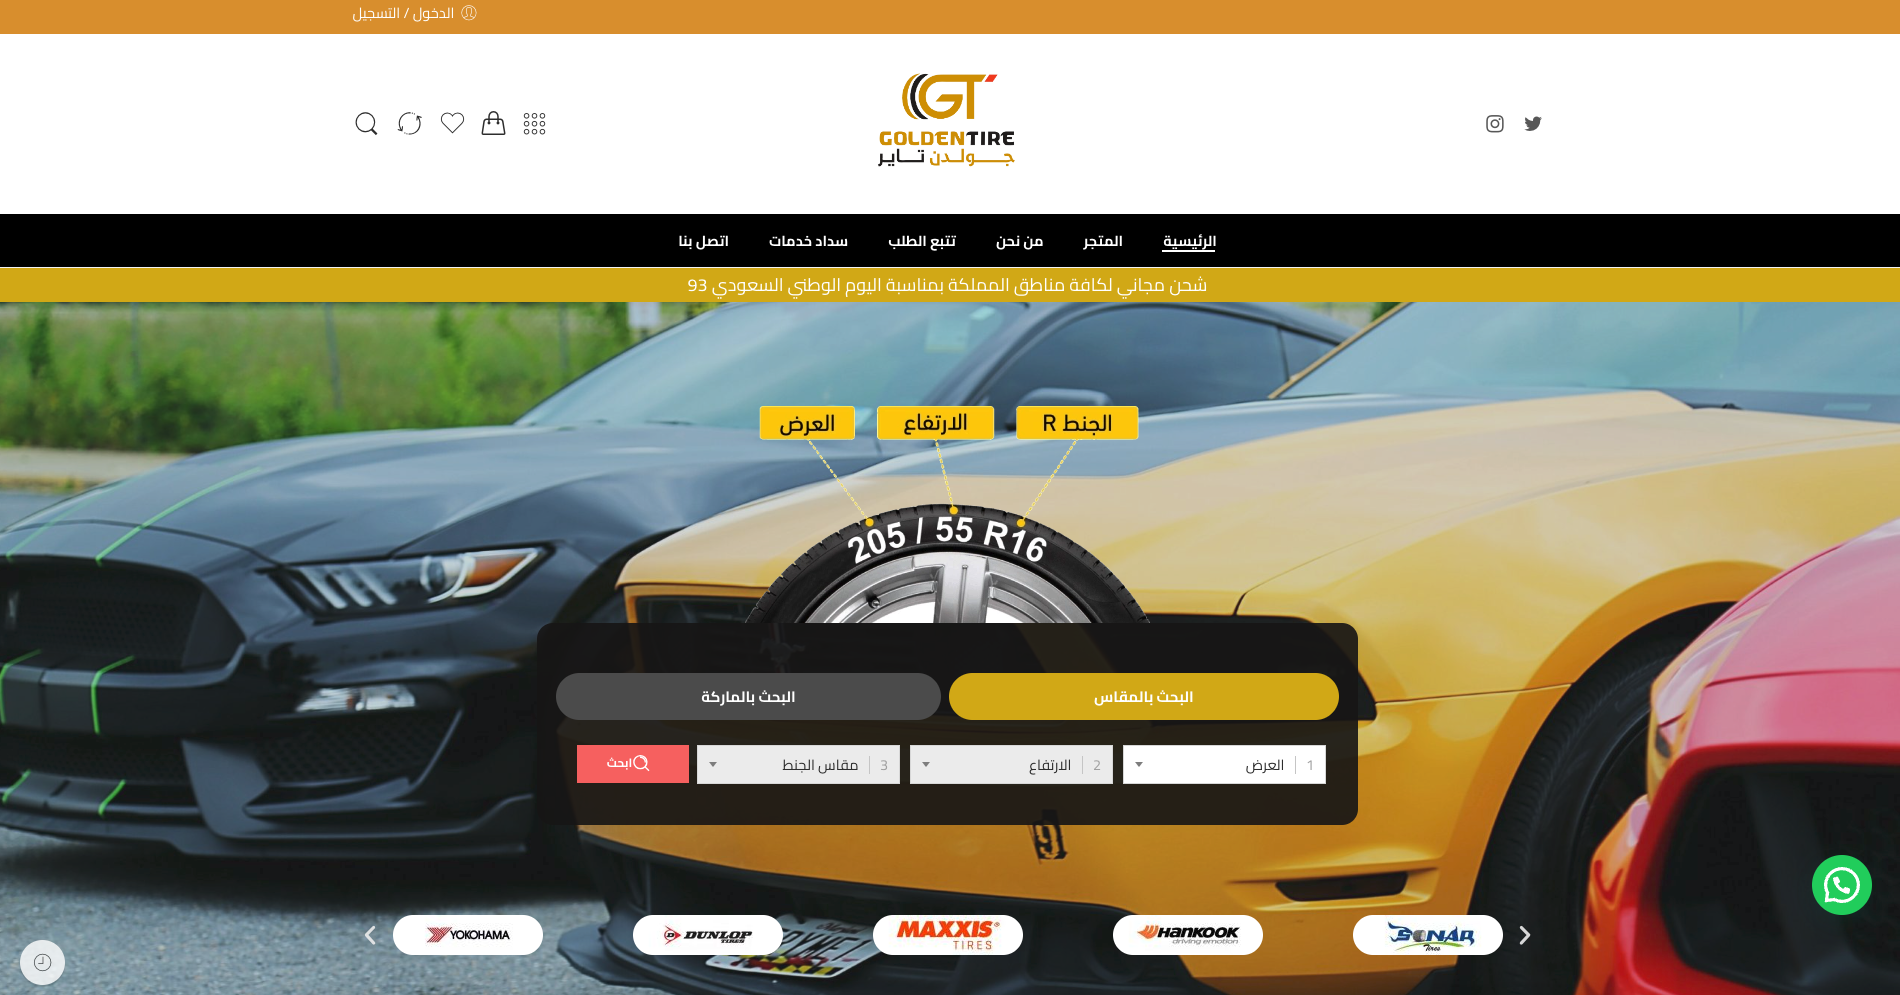 Golden Tire Company